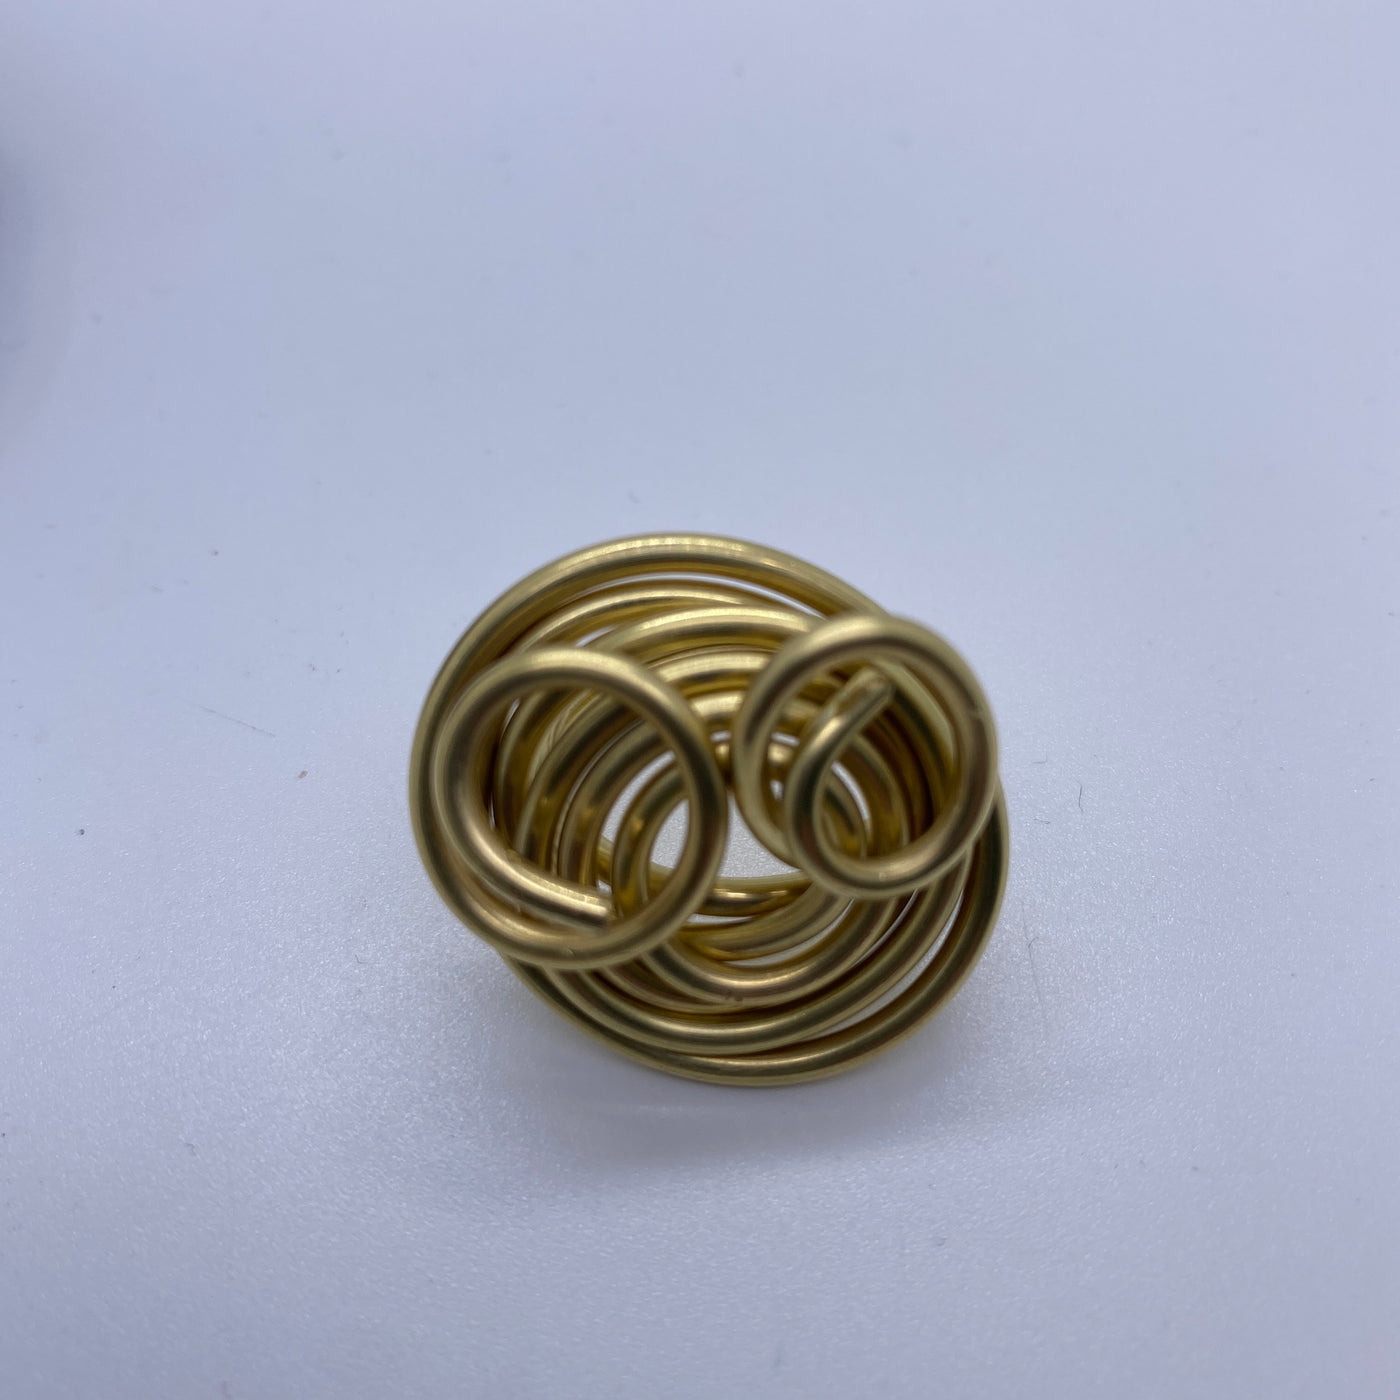 Brass ring n.11 size R